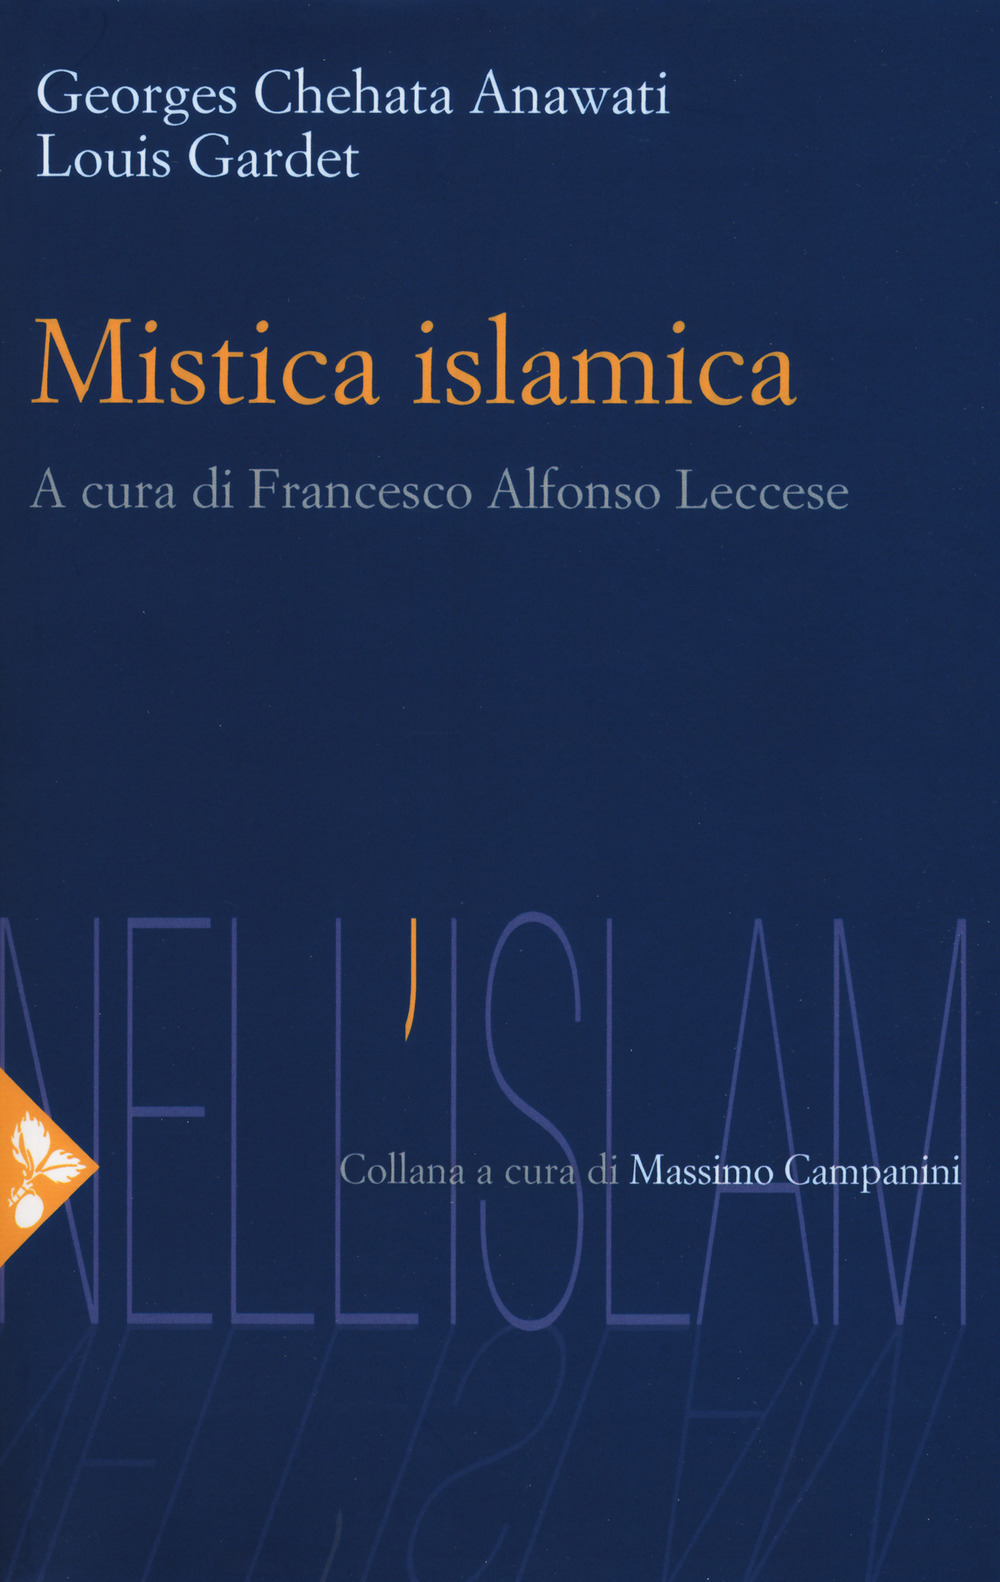 Image of Mistica islamica